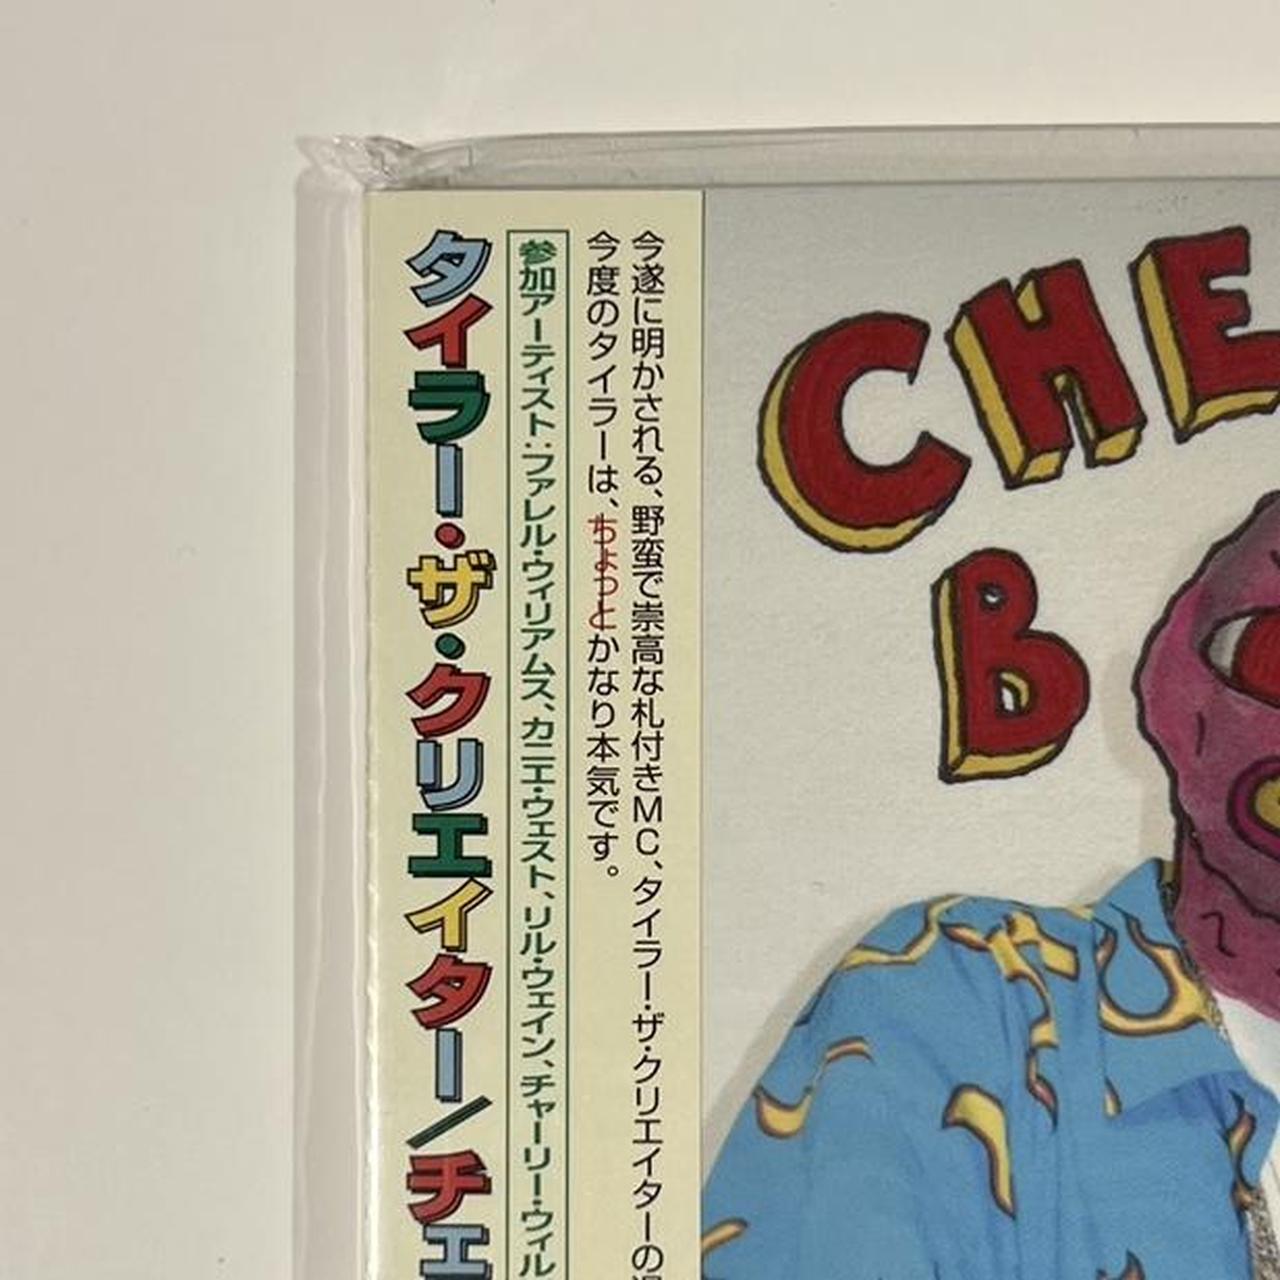 Tyler The Creator - Cherry Bomb CD - Japanese